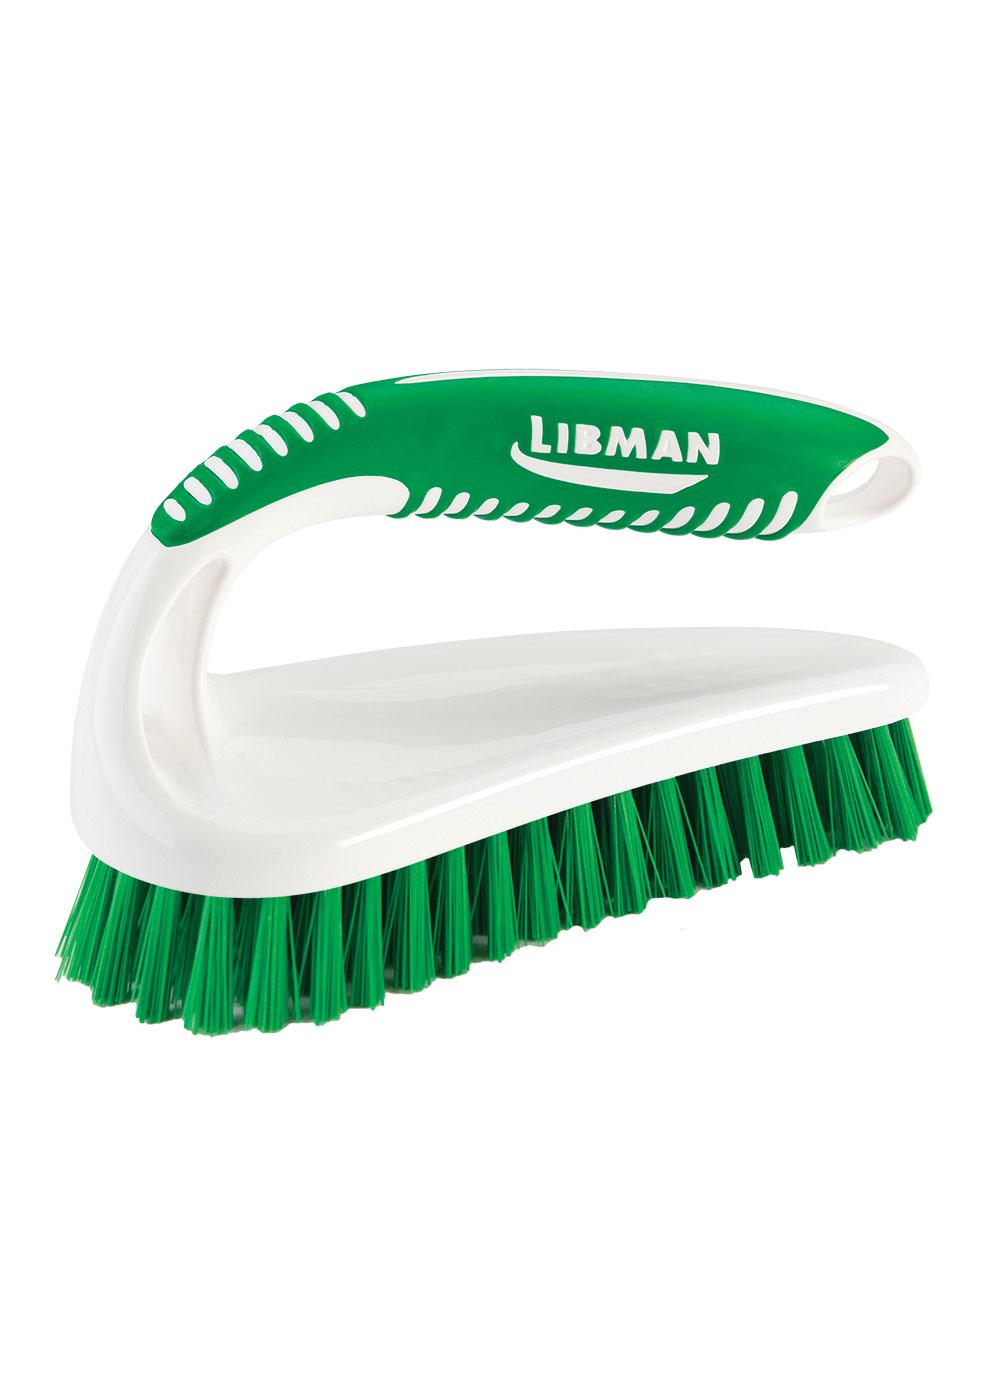 Libman Power Scrub Brush; image 4 of 4